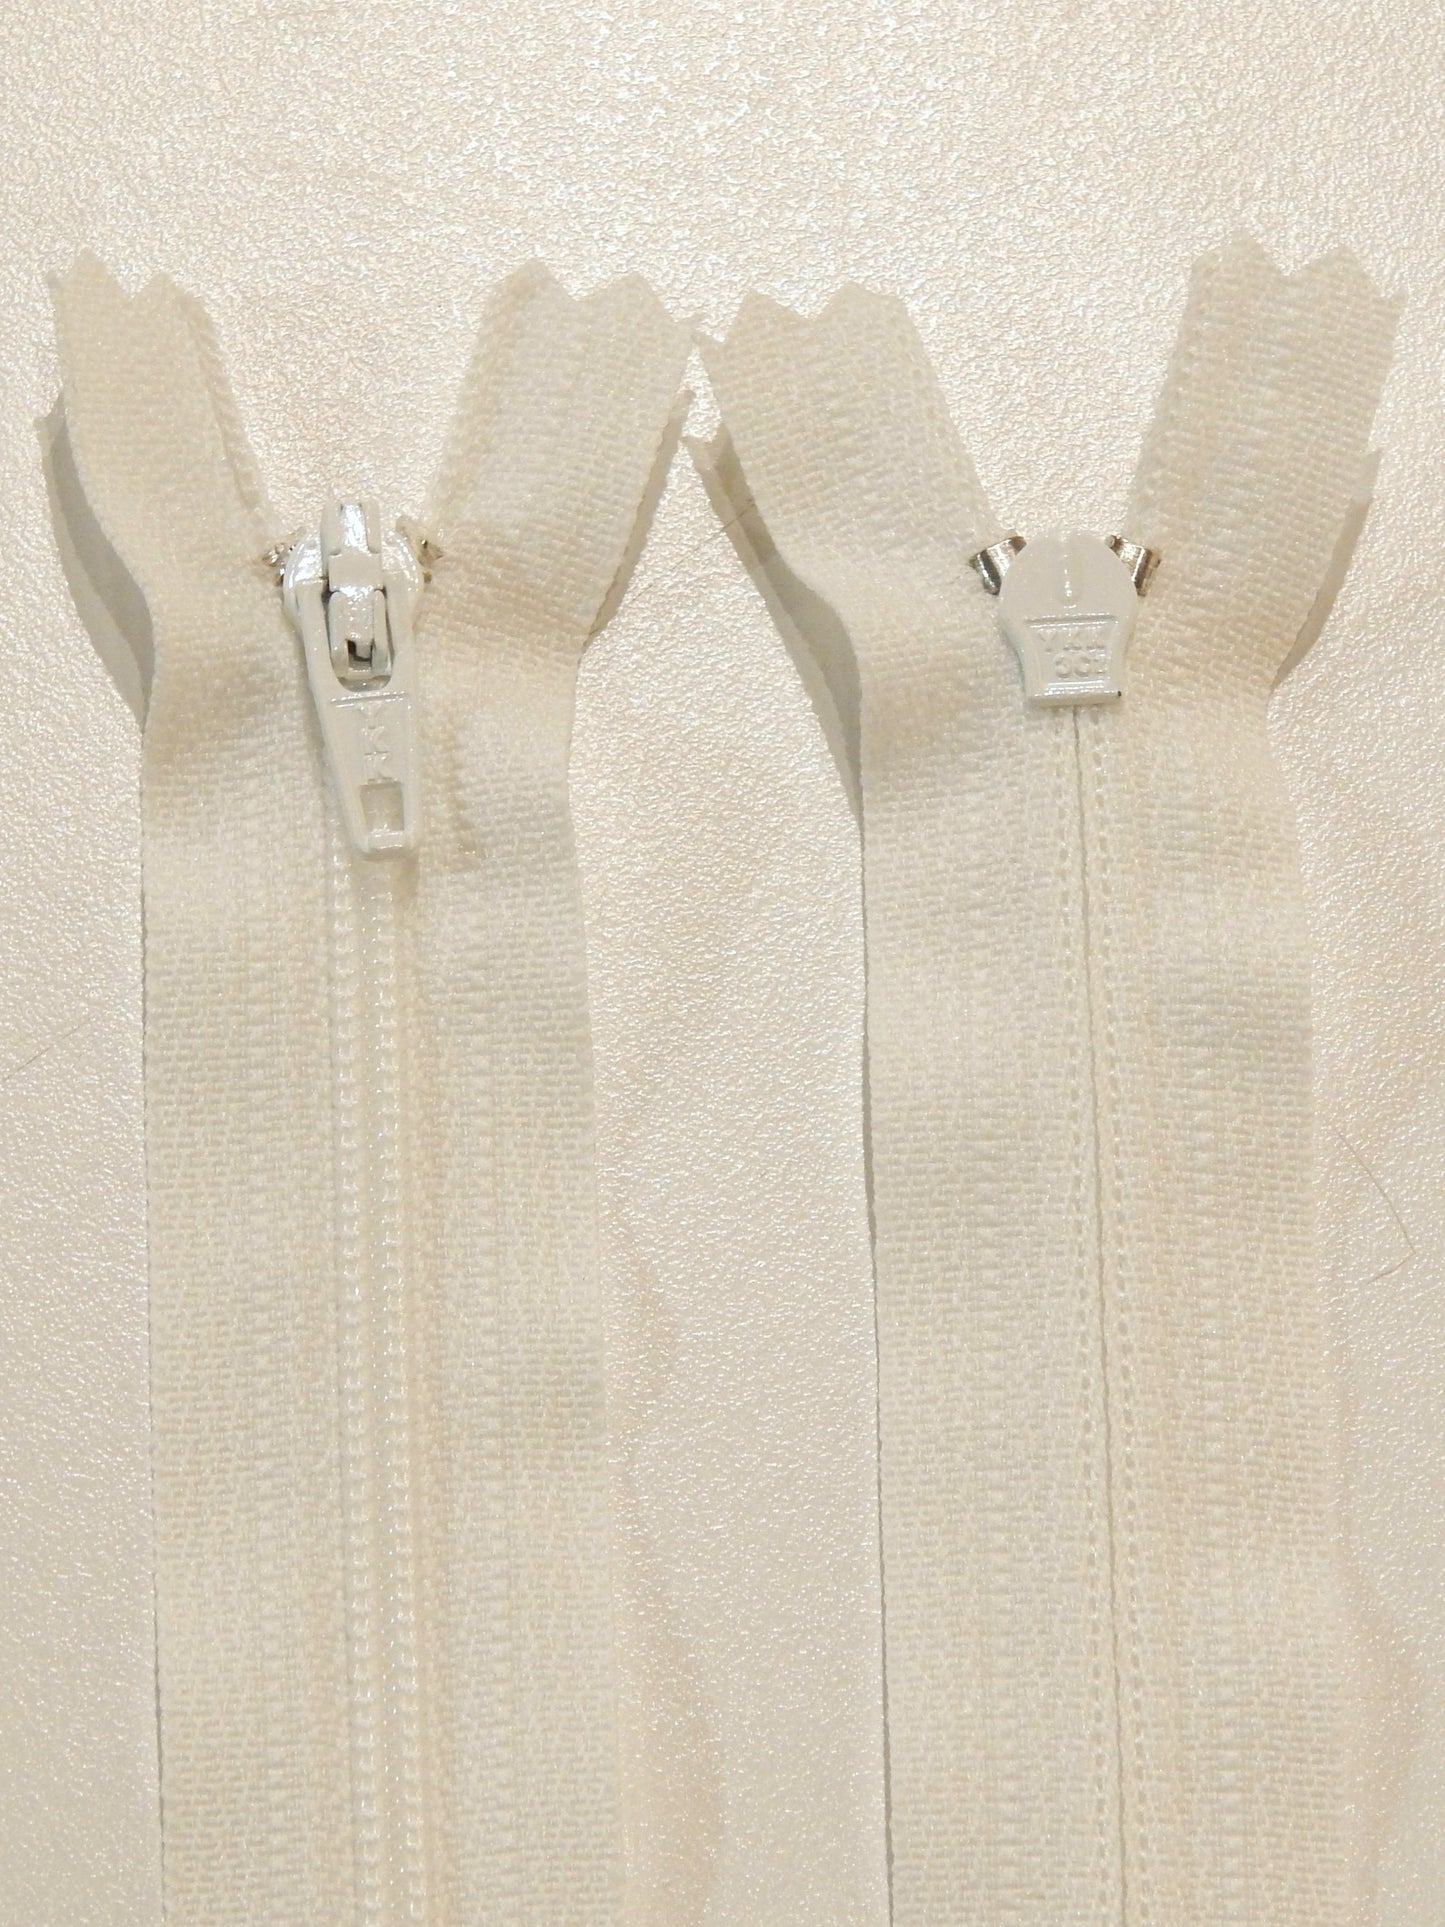 Nylon Nonseparating Dress Zippers